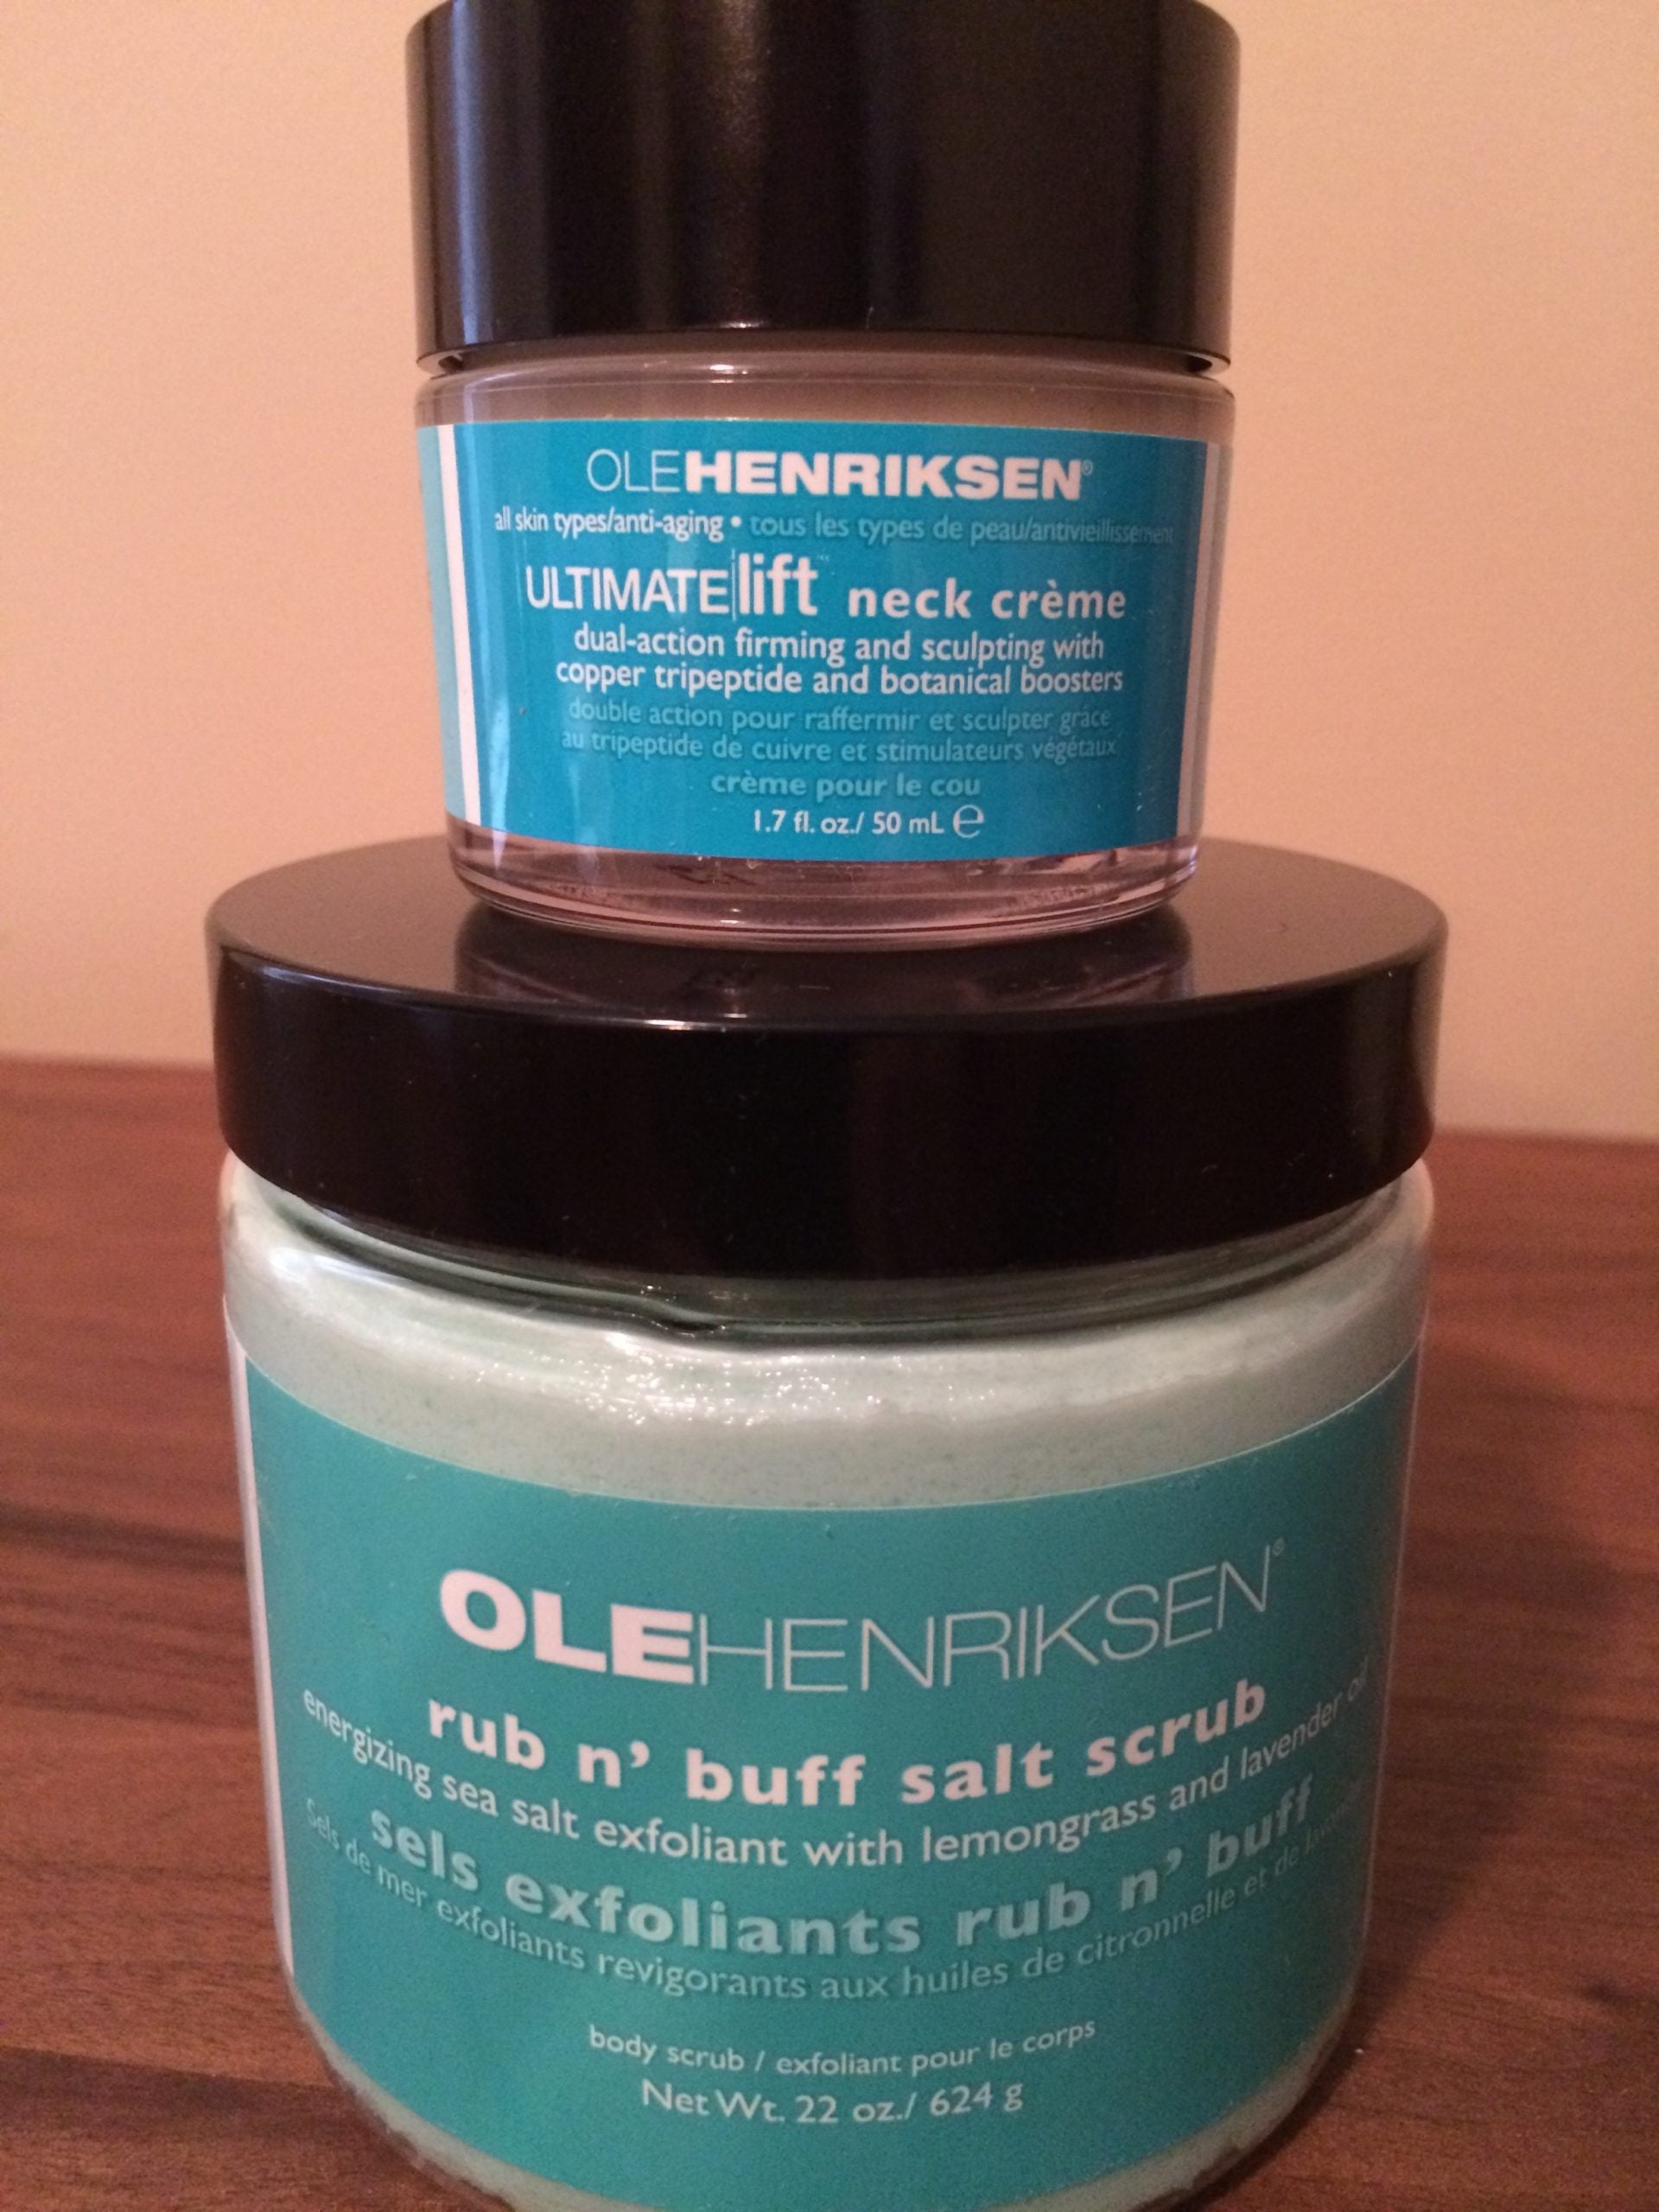 Review: Ole Henriksen Ultimate Lift Neck Crème, Rub N' Buff Salt Scrub - How To Tone, Exfoliate Your Neck